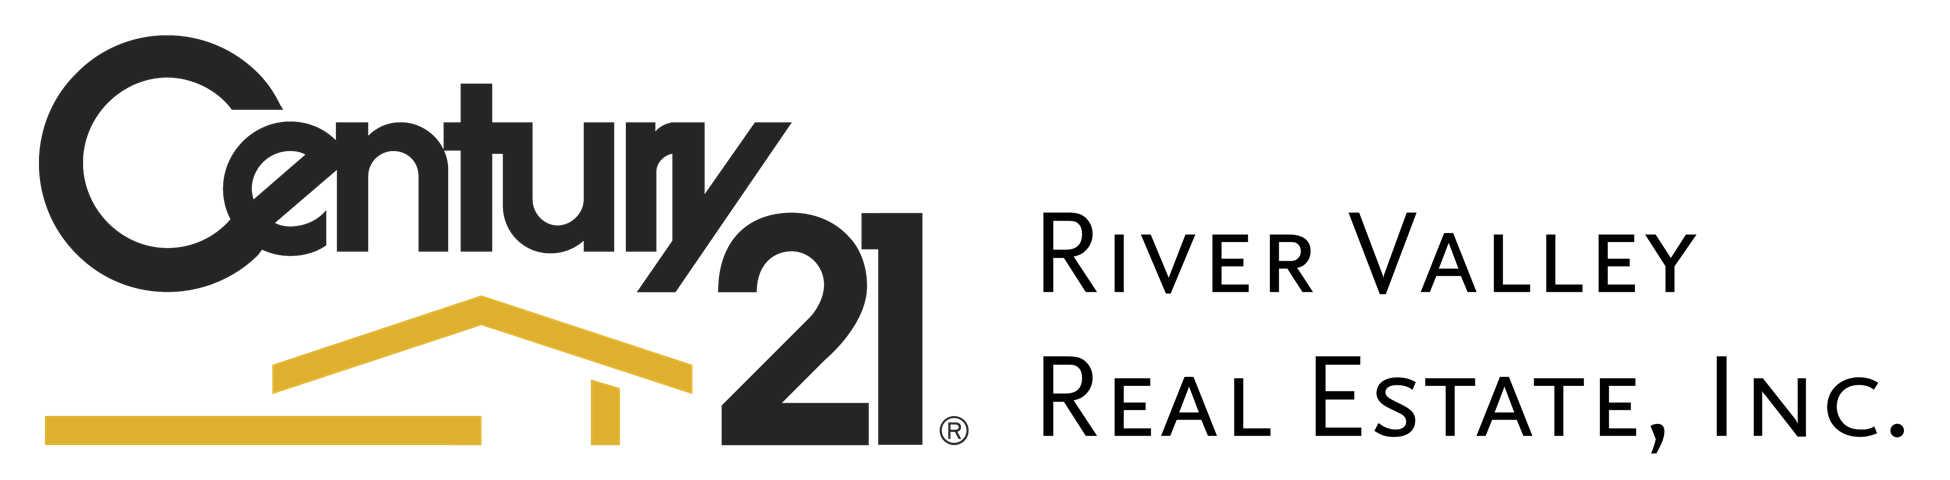 Century Real Estate Logo - CENTURY 21 River Valley Real Estate, Inc